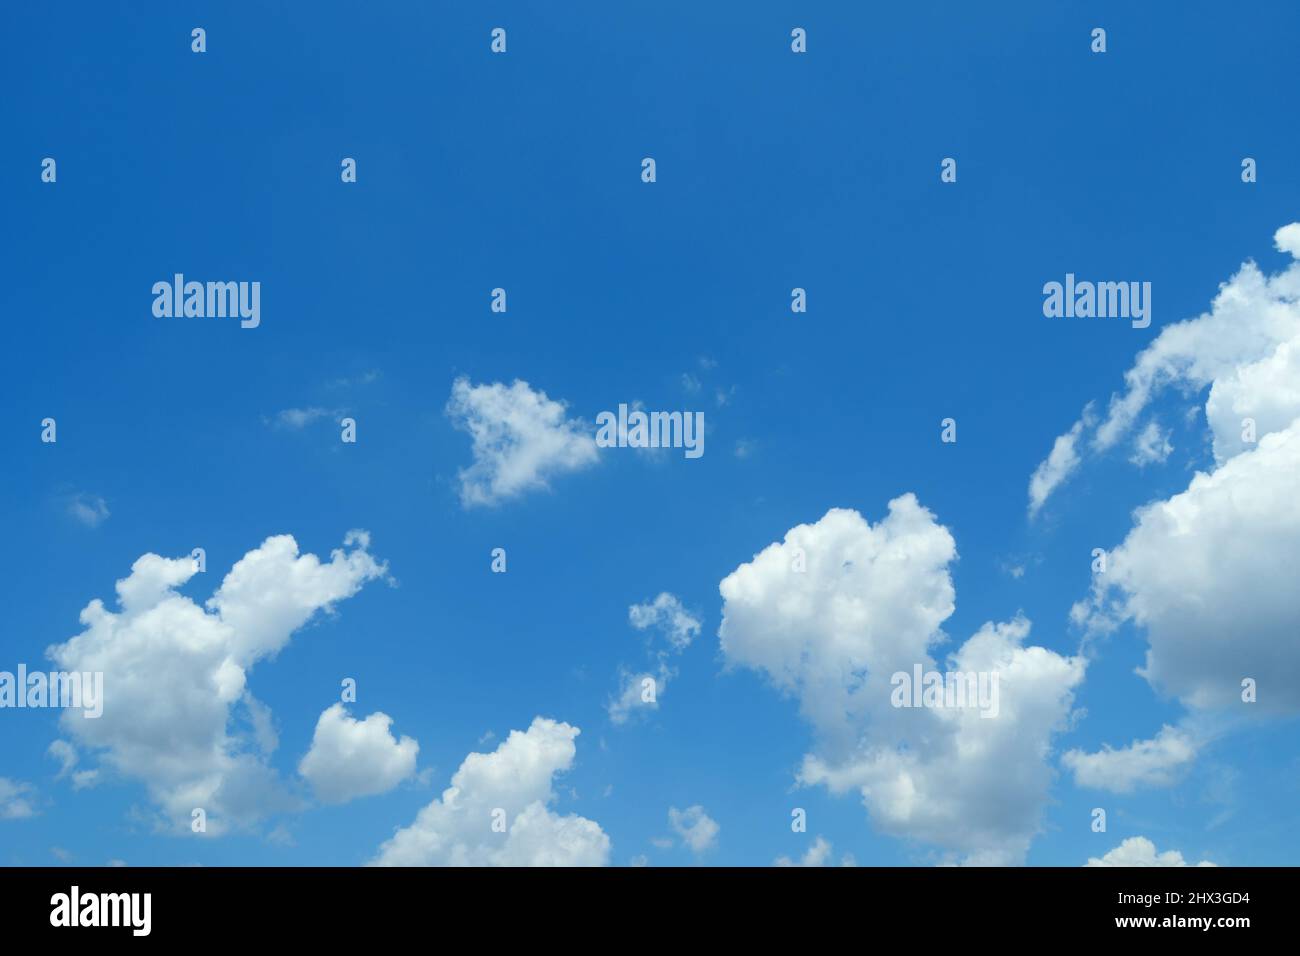 Nuvole nel cielo blu. Cielo chiaro. Nuvole bianche nel cielo blu bello. Cielo blu con nuvole bianche sullo sfondo. Nuvole bianche e soffici in blu Foto Stock